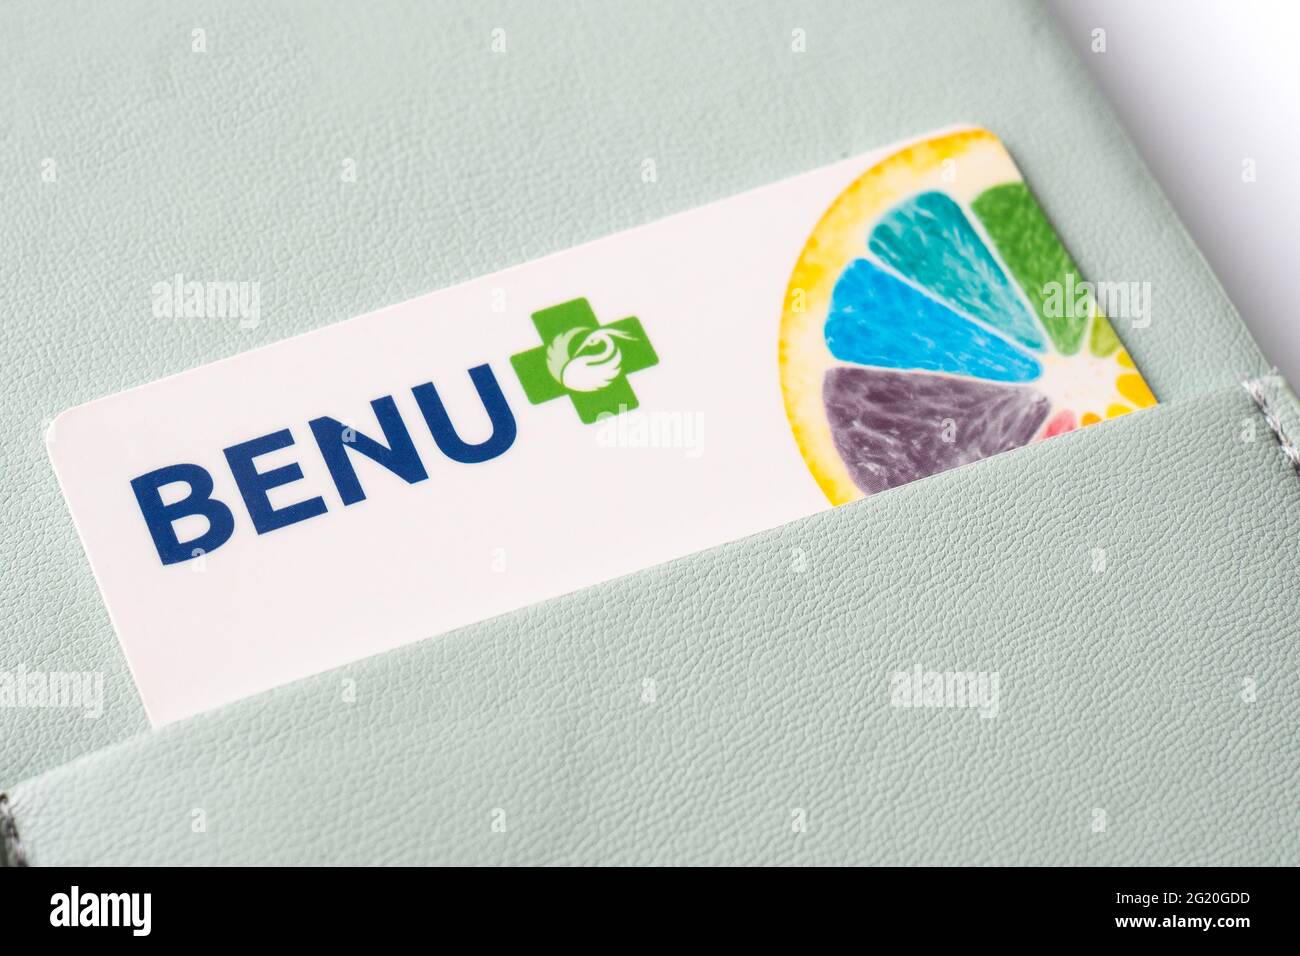 Benu is European pharmacies brand in Lithuania, Latvia, Estonia, Hungary, Switzerland, Czech Republic, Slovakia, Serbia, Netherlands, and Montenegro. Stock Photo